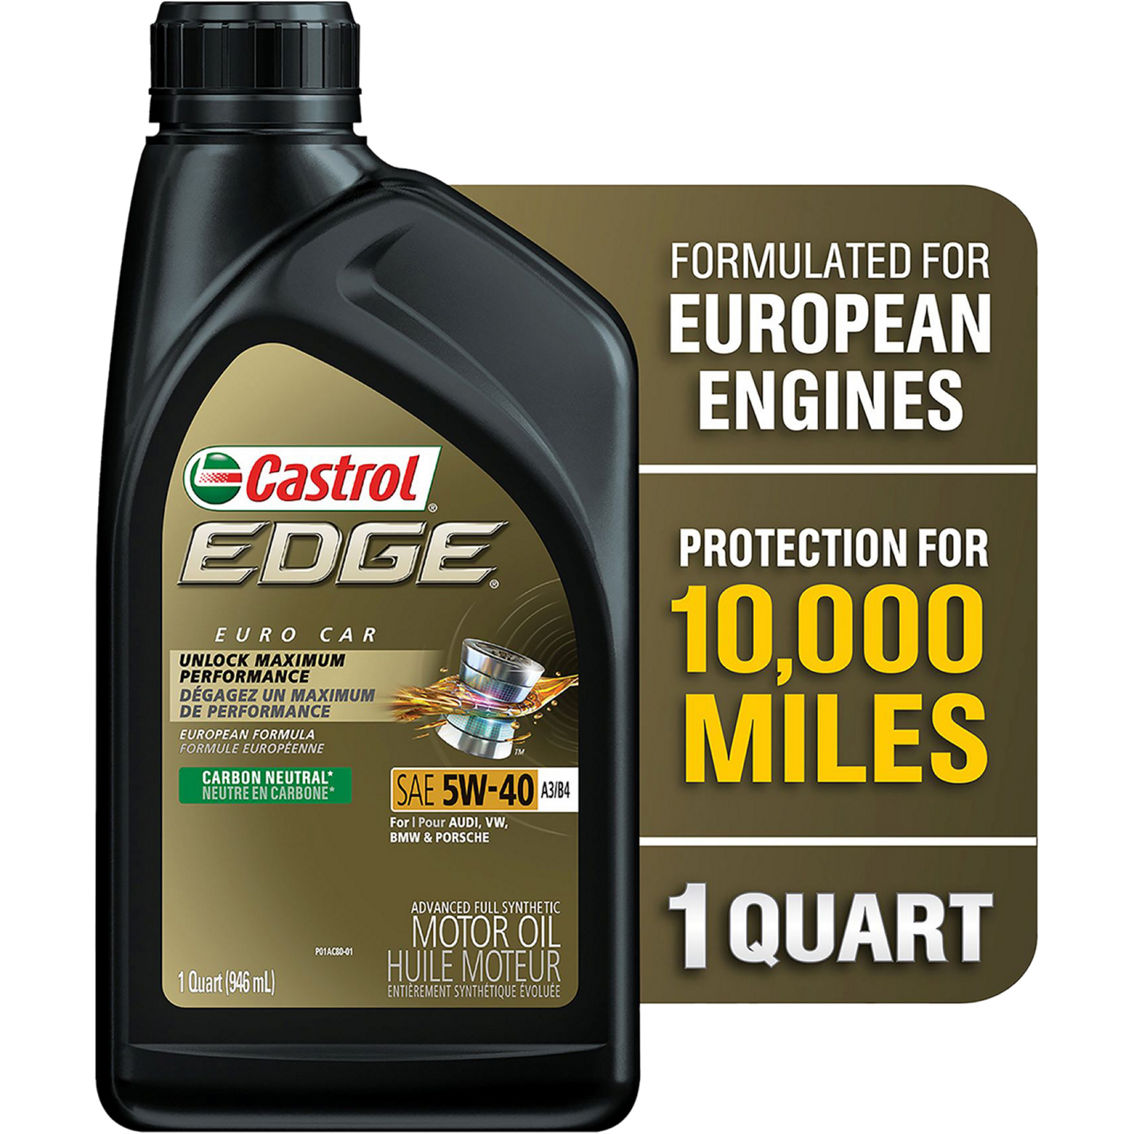 Castrol Edge 5W-40 A3/B4, 6X1USqt UC Motor Oil - Image 4 of 4